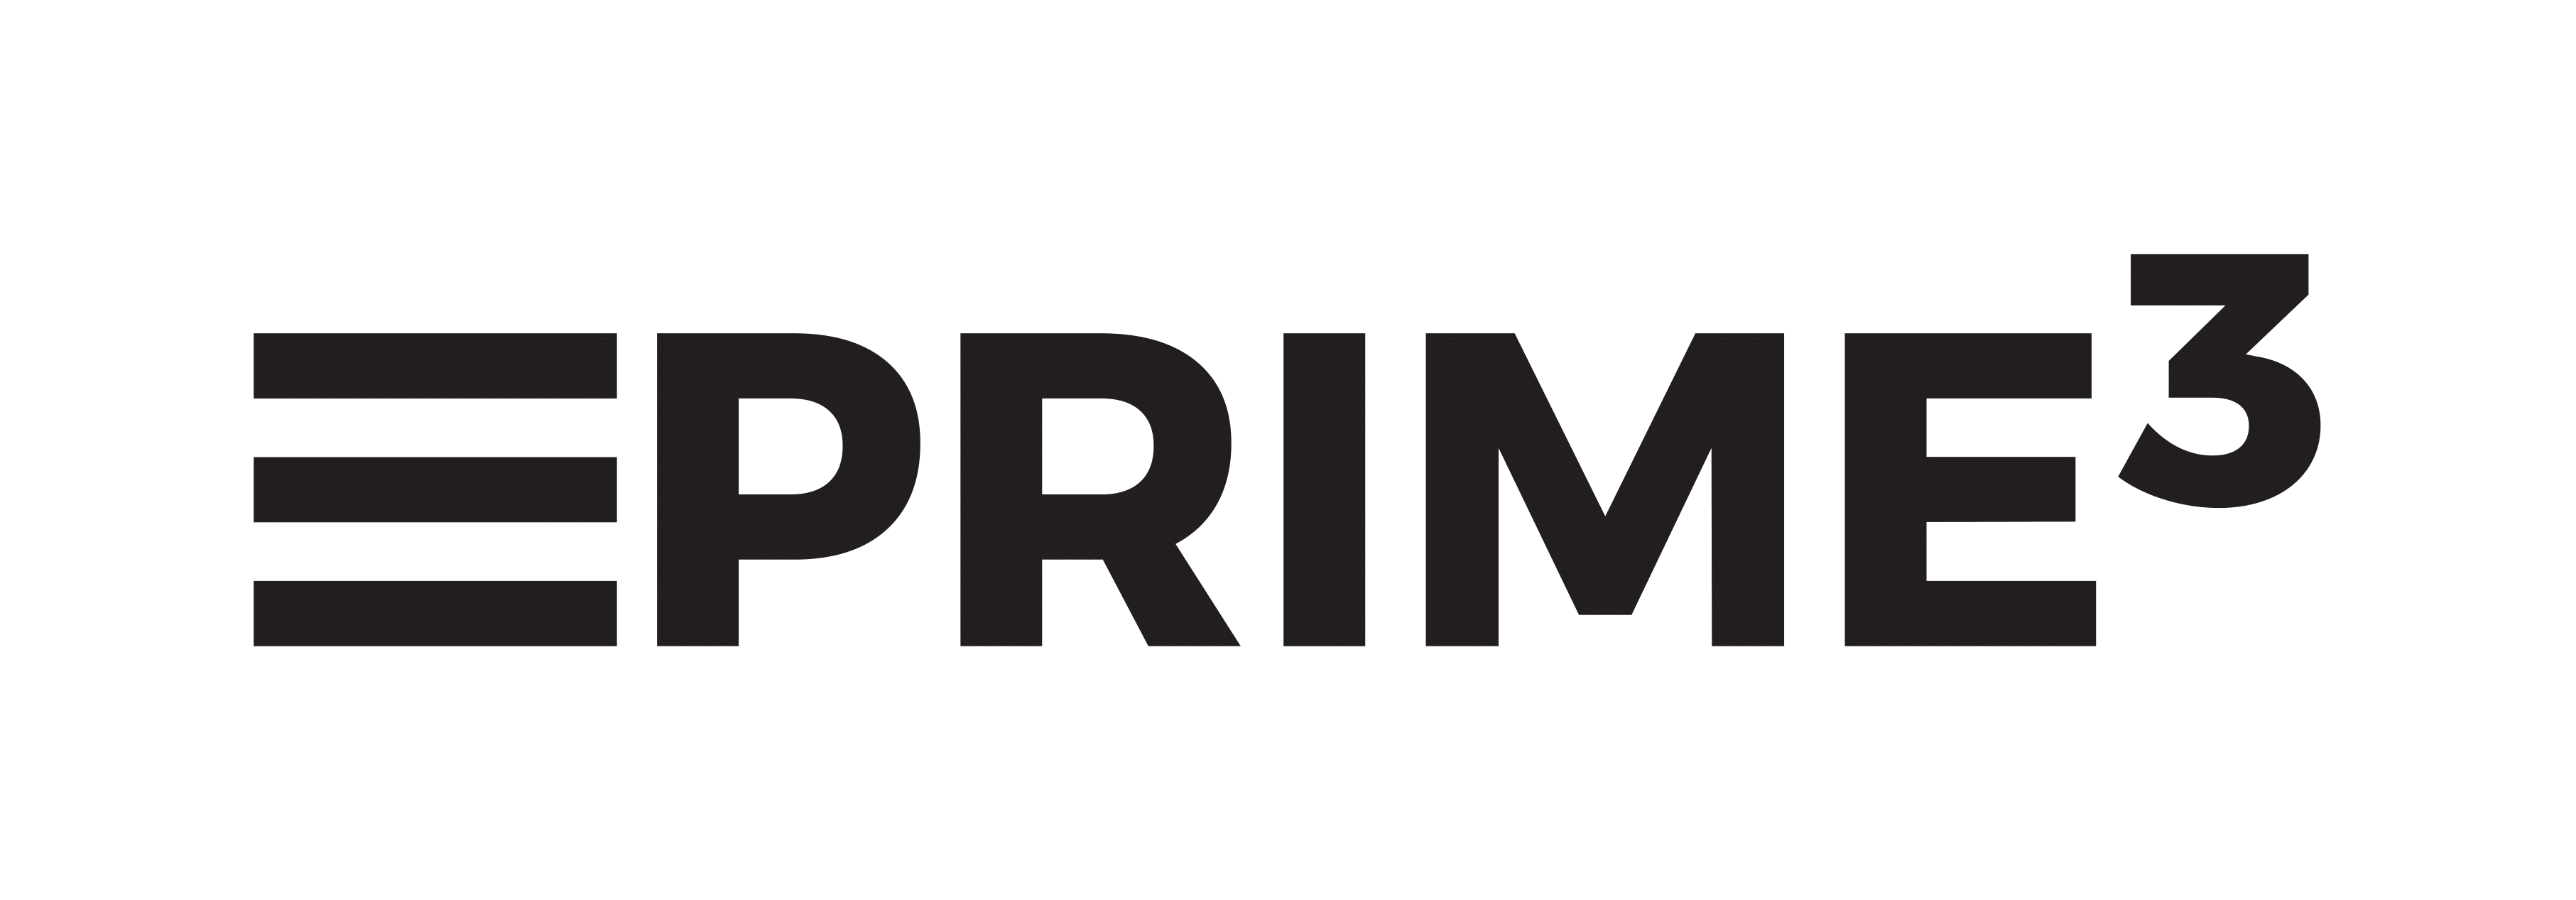 Prime3-1